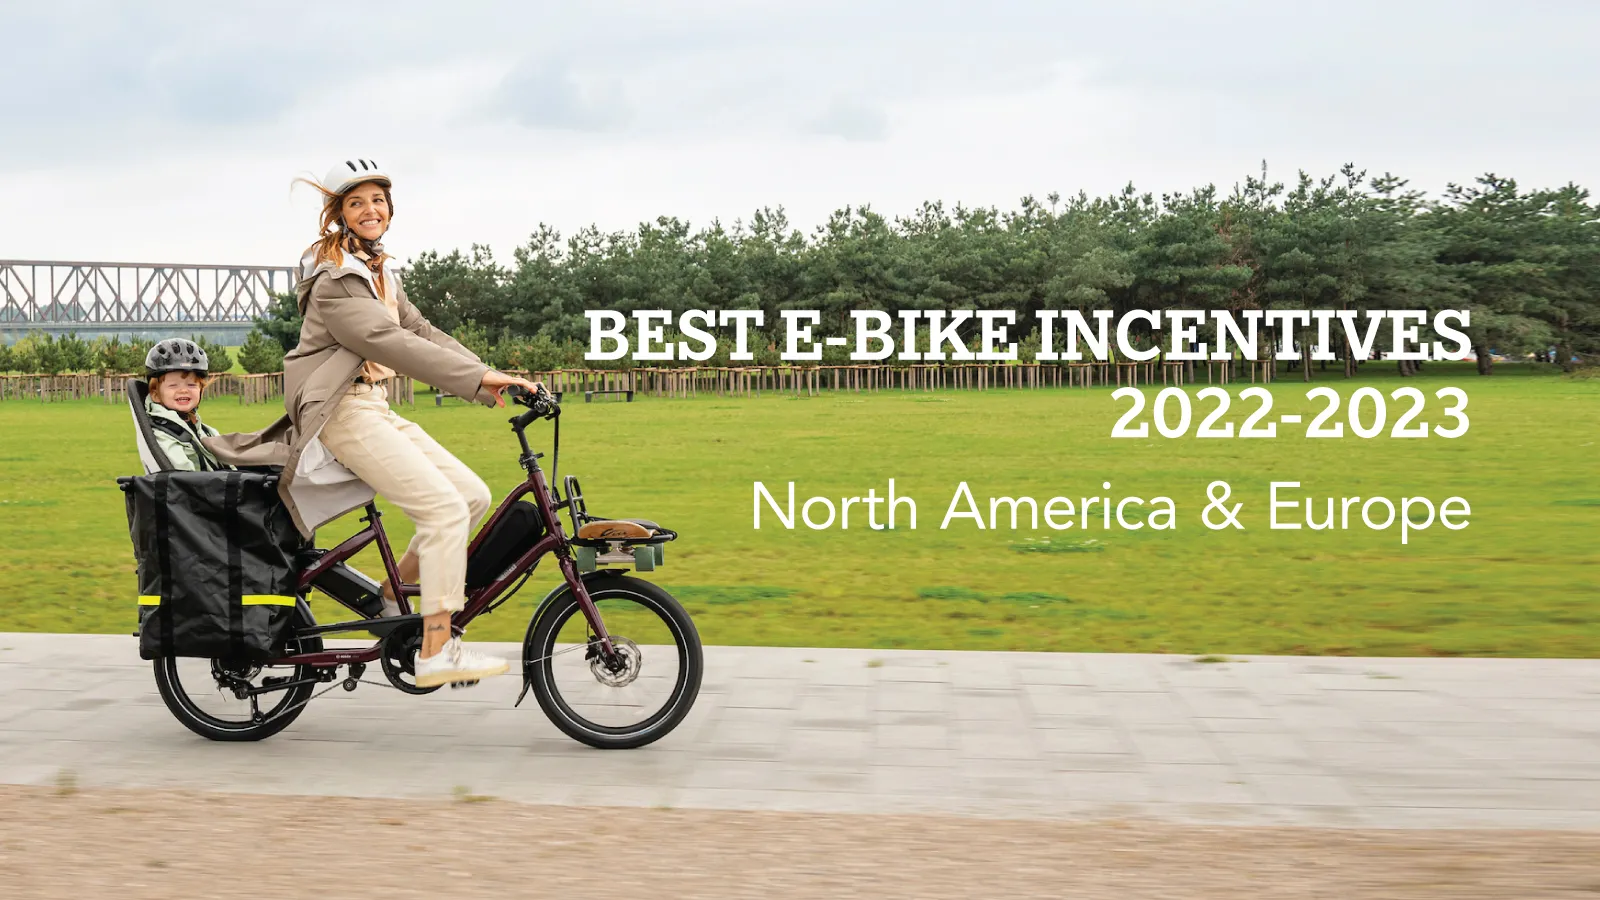 2022-2023 E-Bike Incentive Programs in North America and Europe